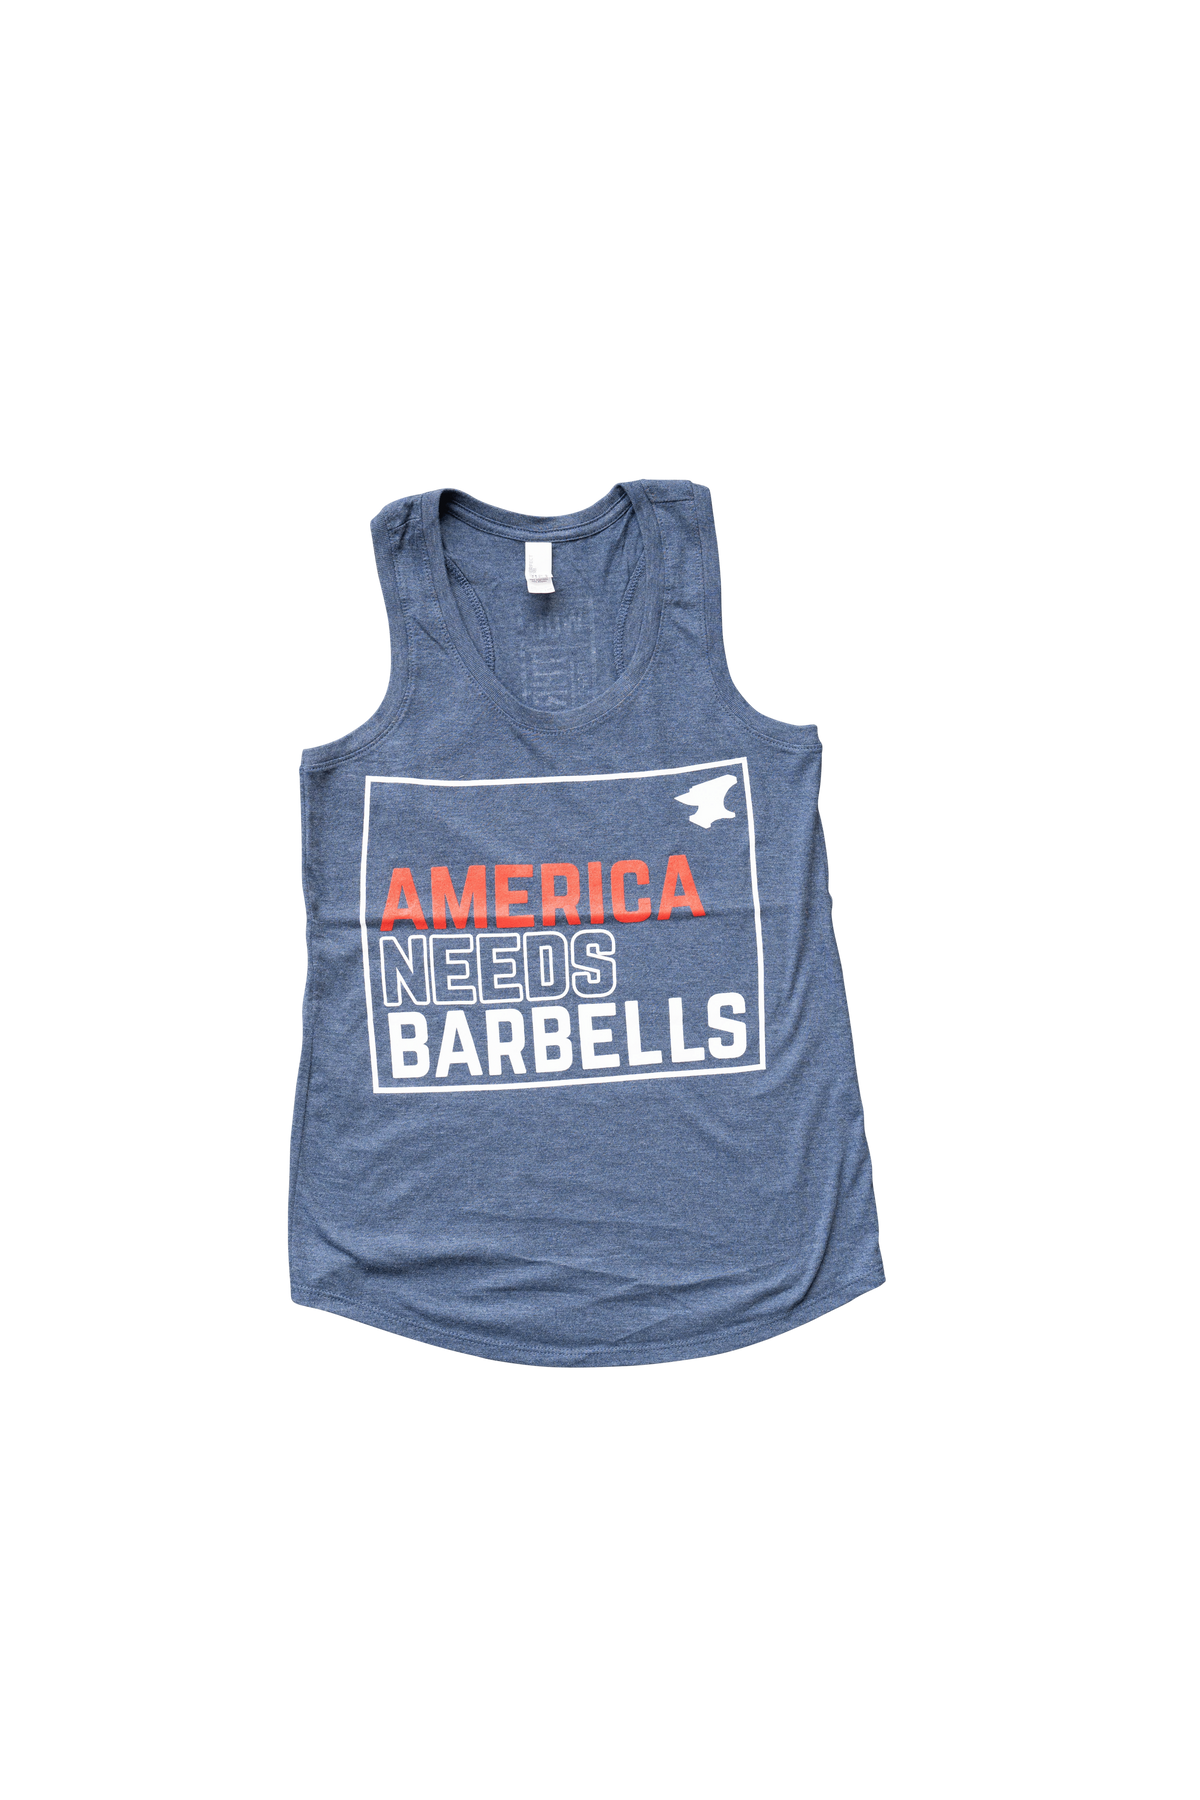 America Needs Barbells tank